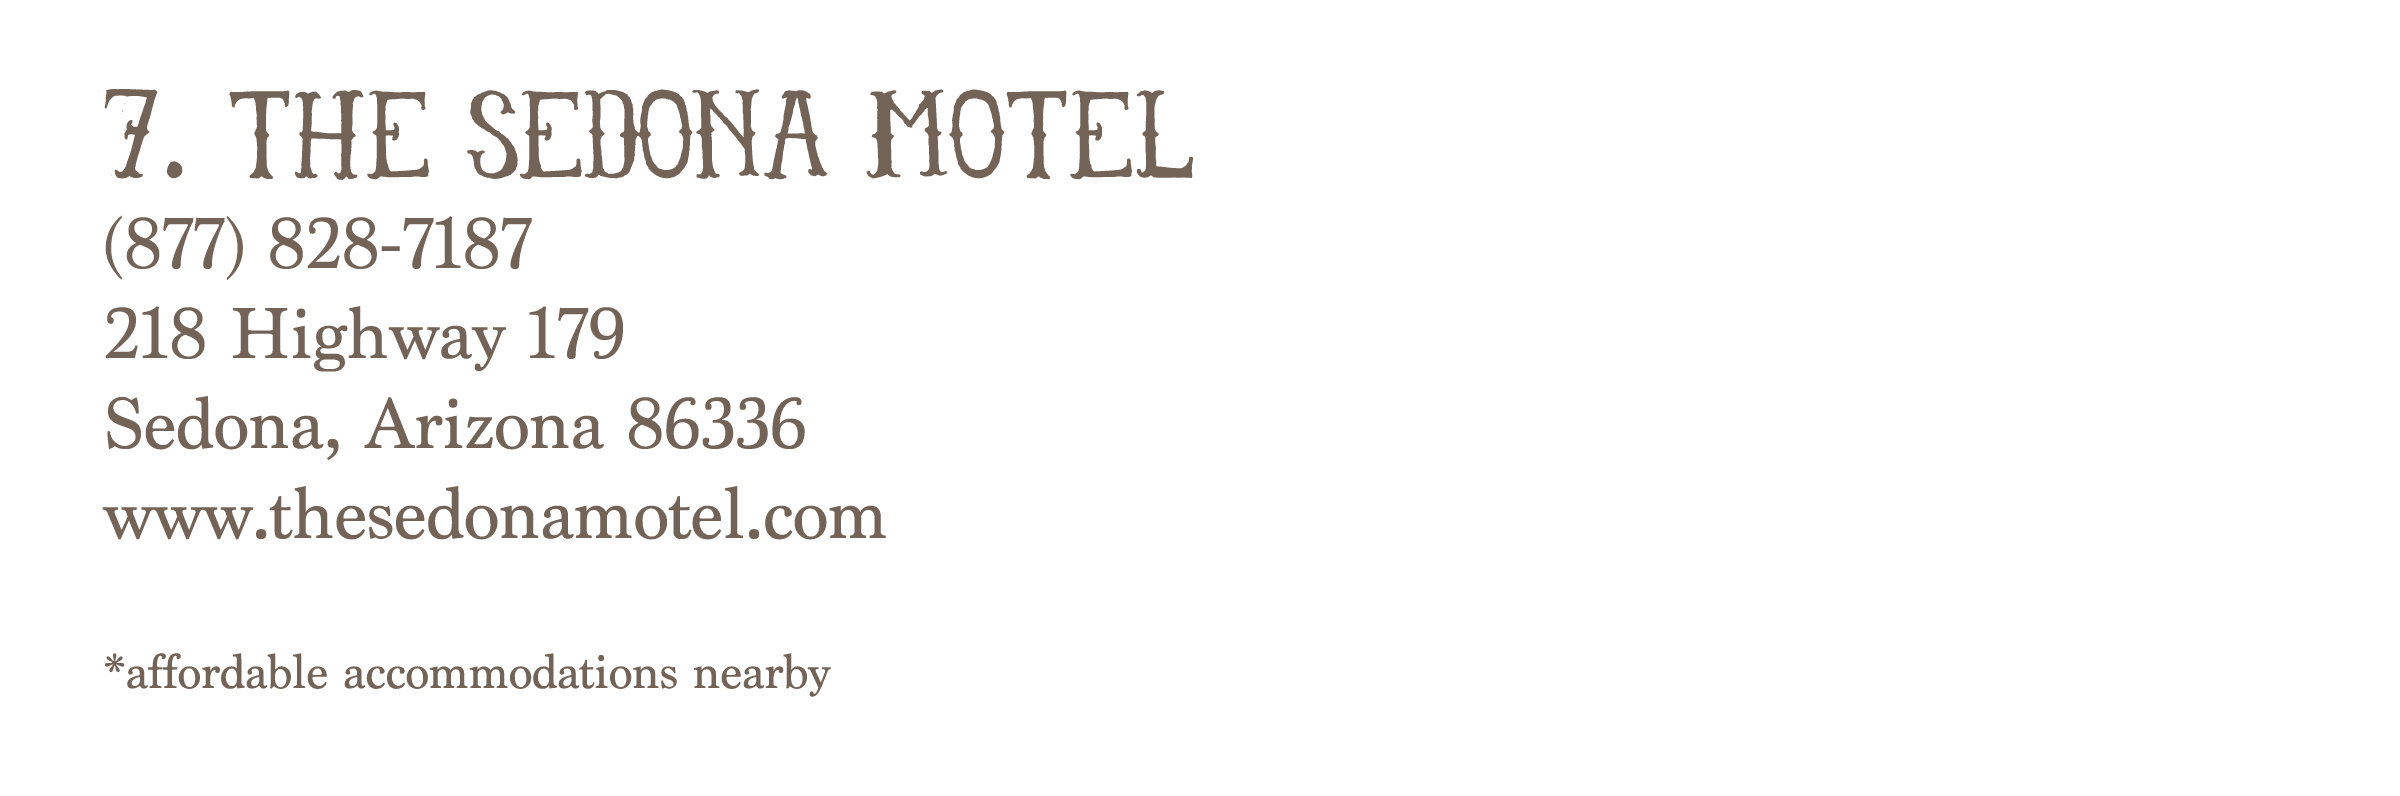 7 sedona motel info